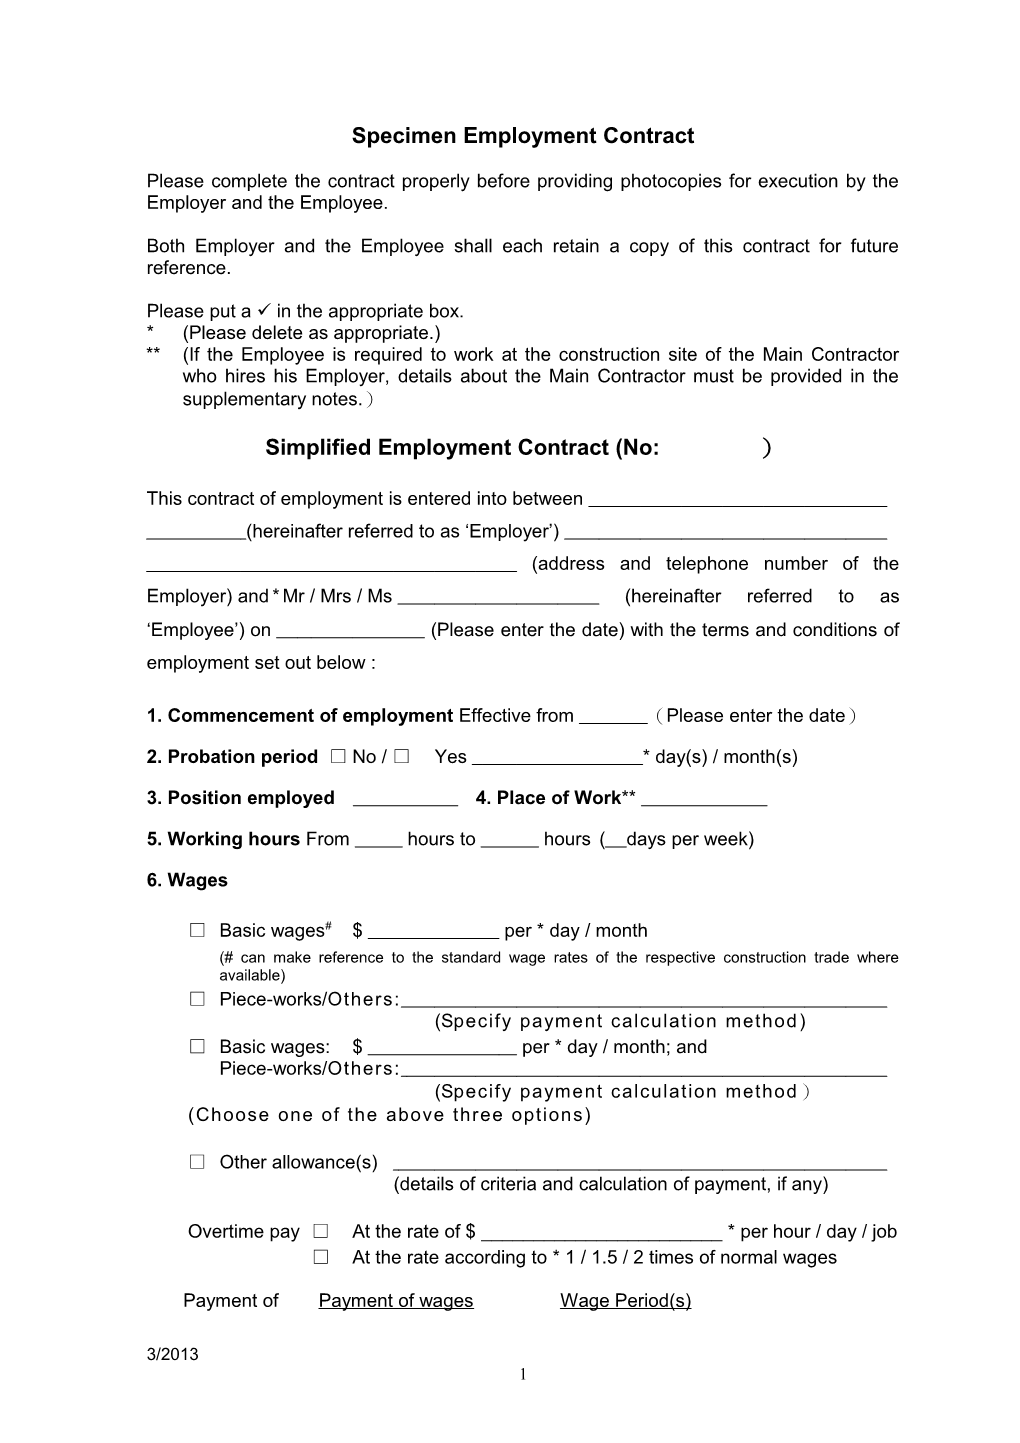 Specimen Employment Contract